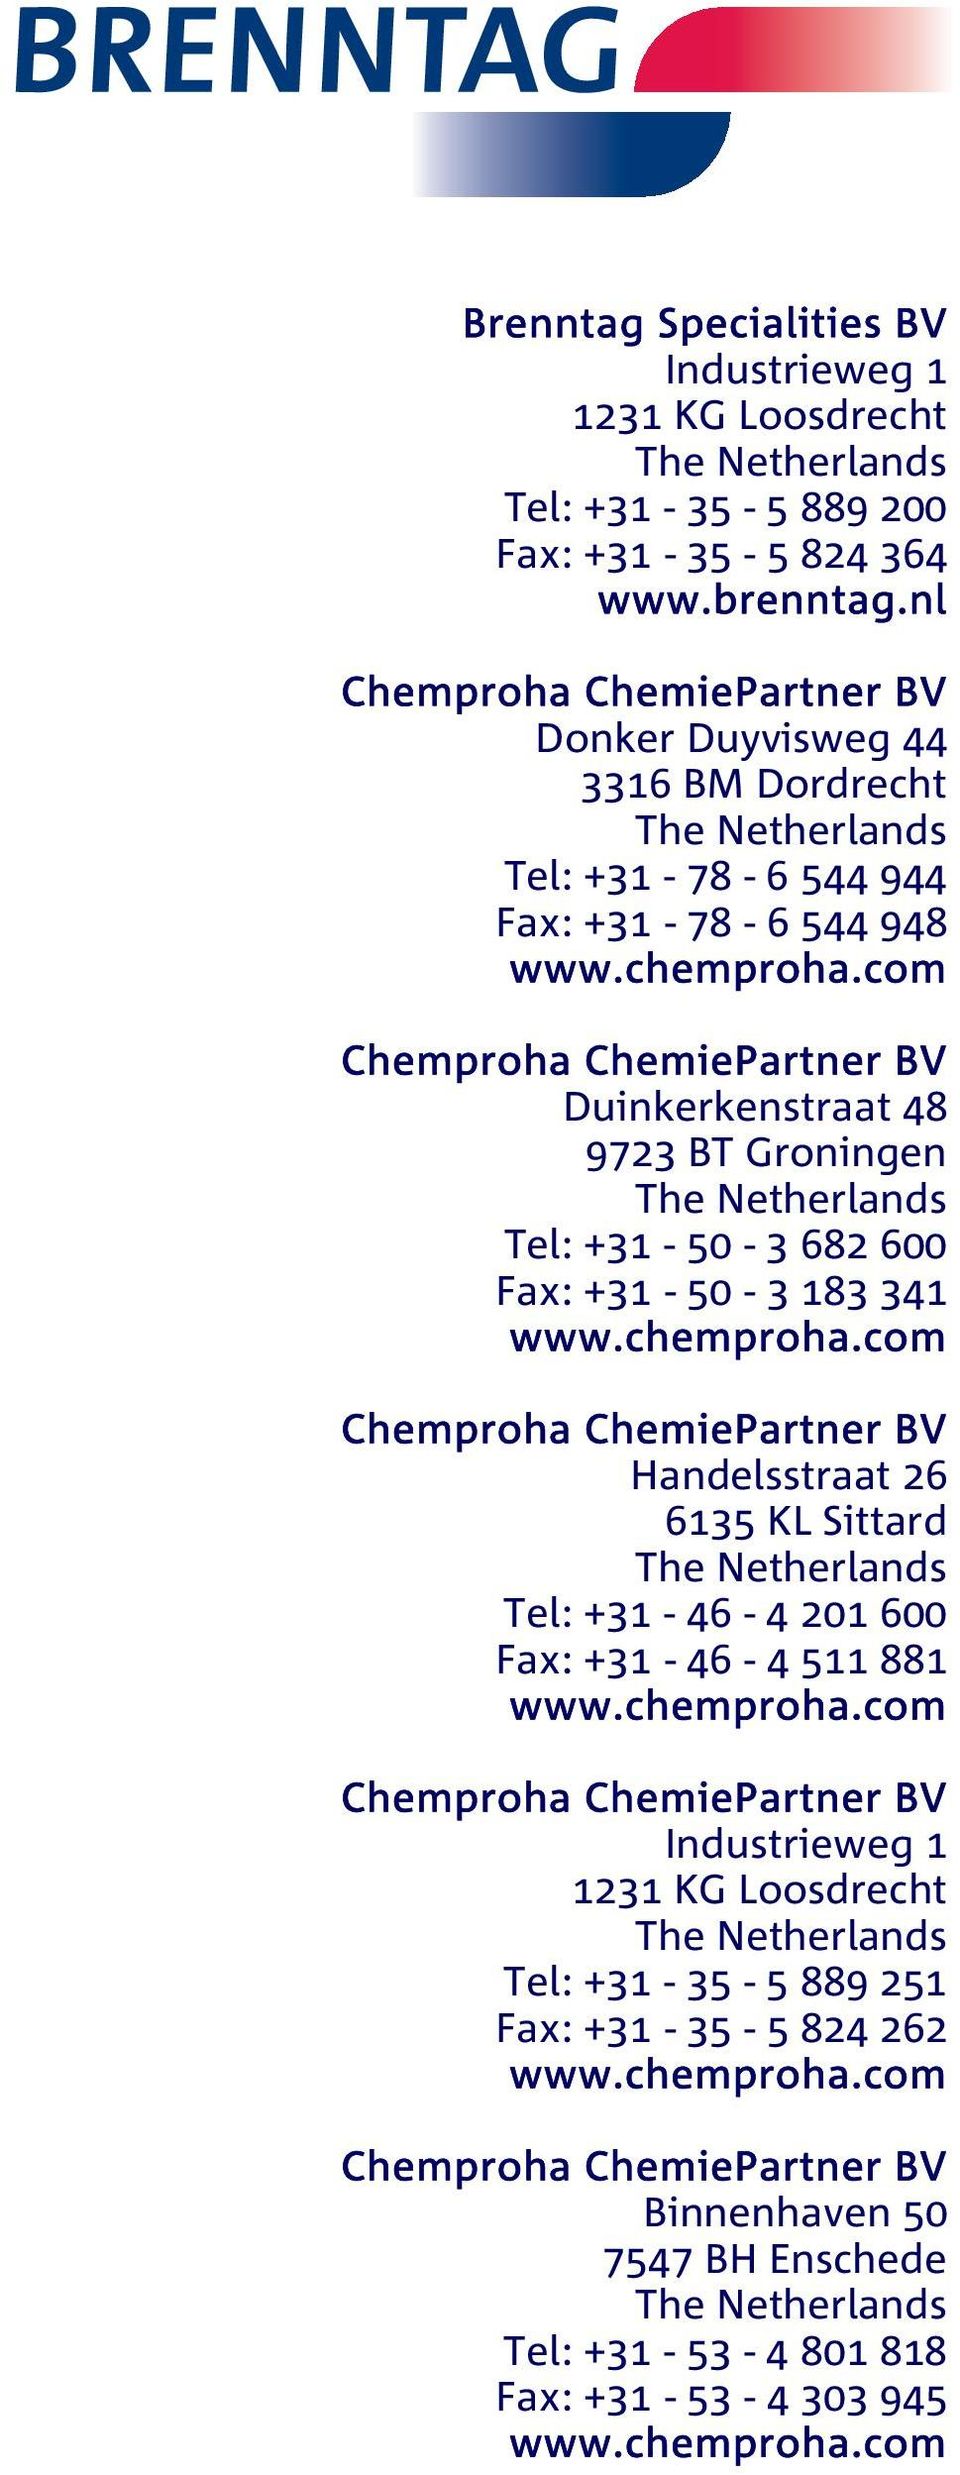 com Chemproha ChemiePartner BV Duinkerkenstraat 48 9723 BT Groningen Tel: +31-50 - 3 682 600 Fax: +31-50 - 3 183 341 www.chemproha.